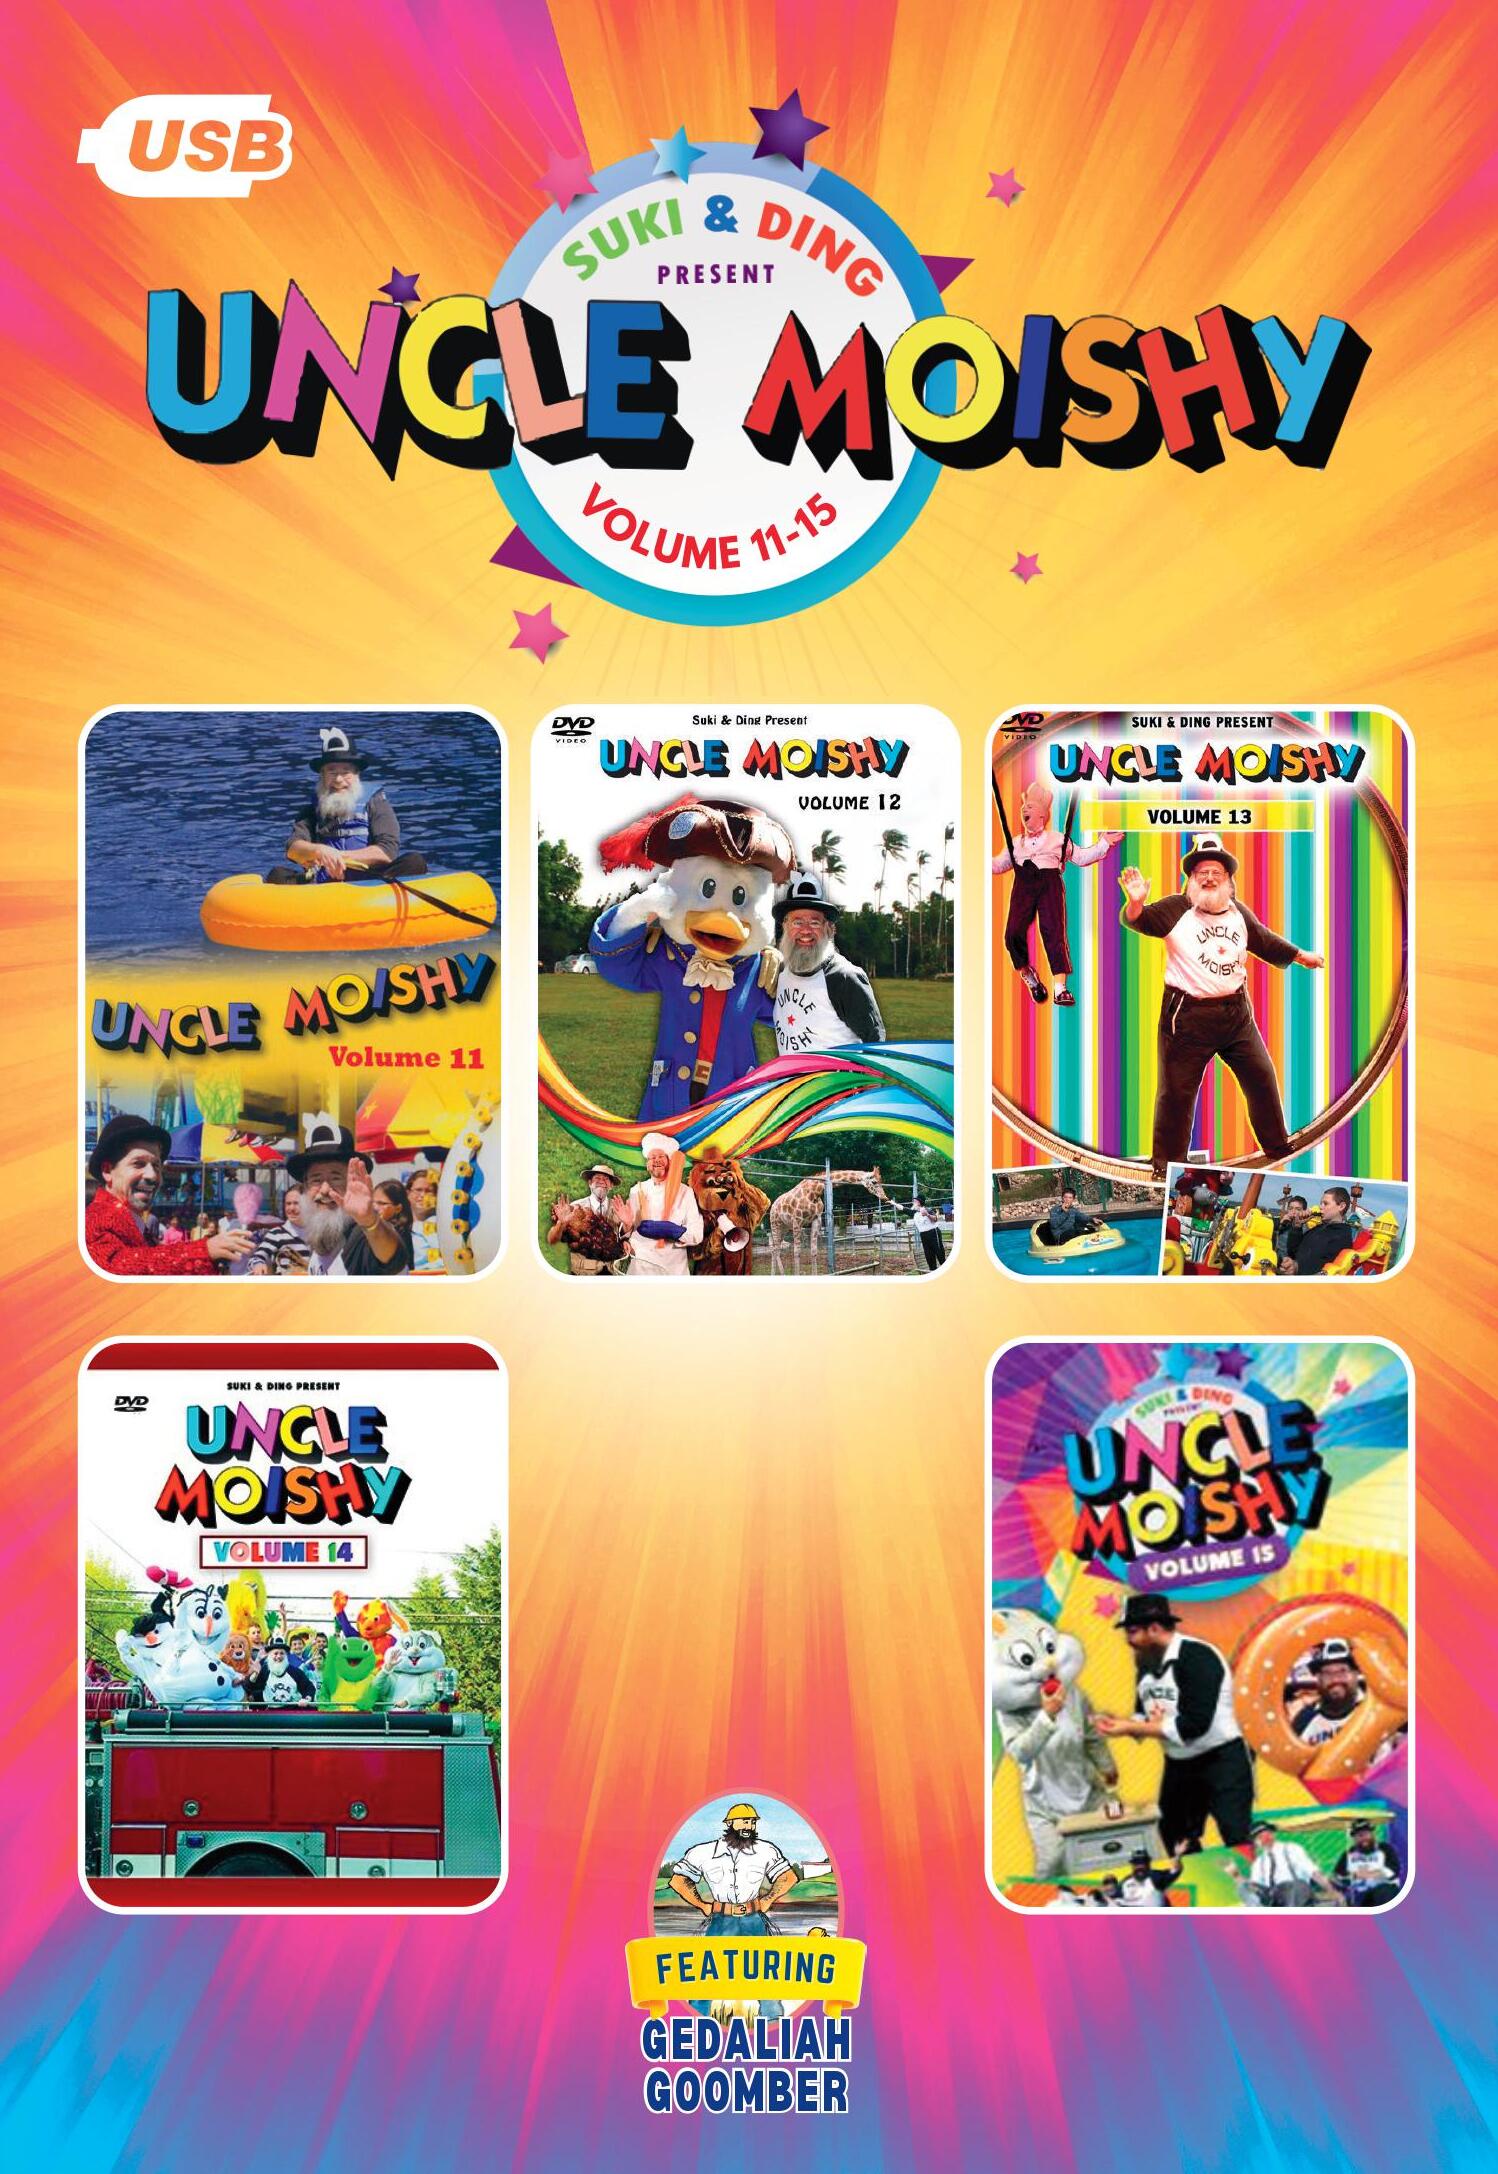 Uncle Moishy - Vol. 11-15 USB (Video)